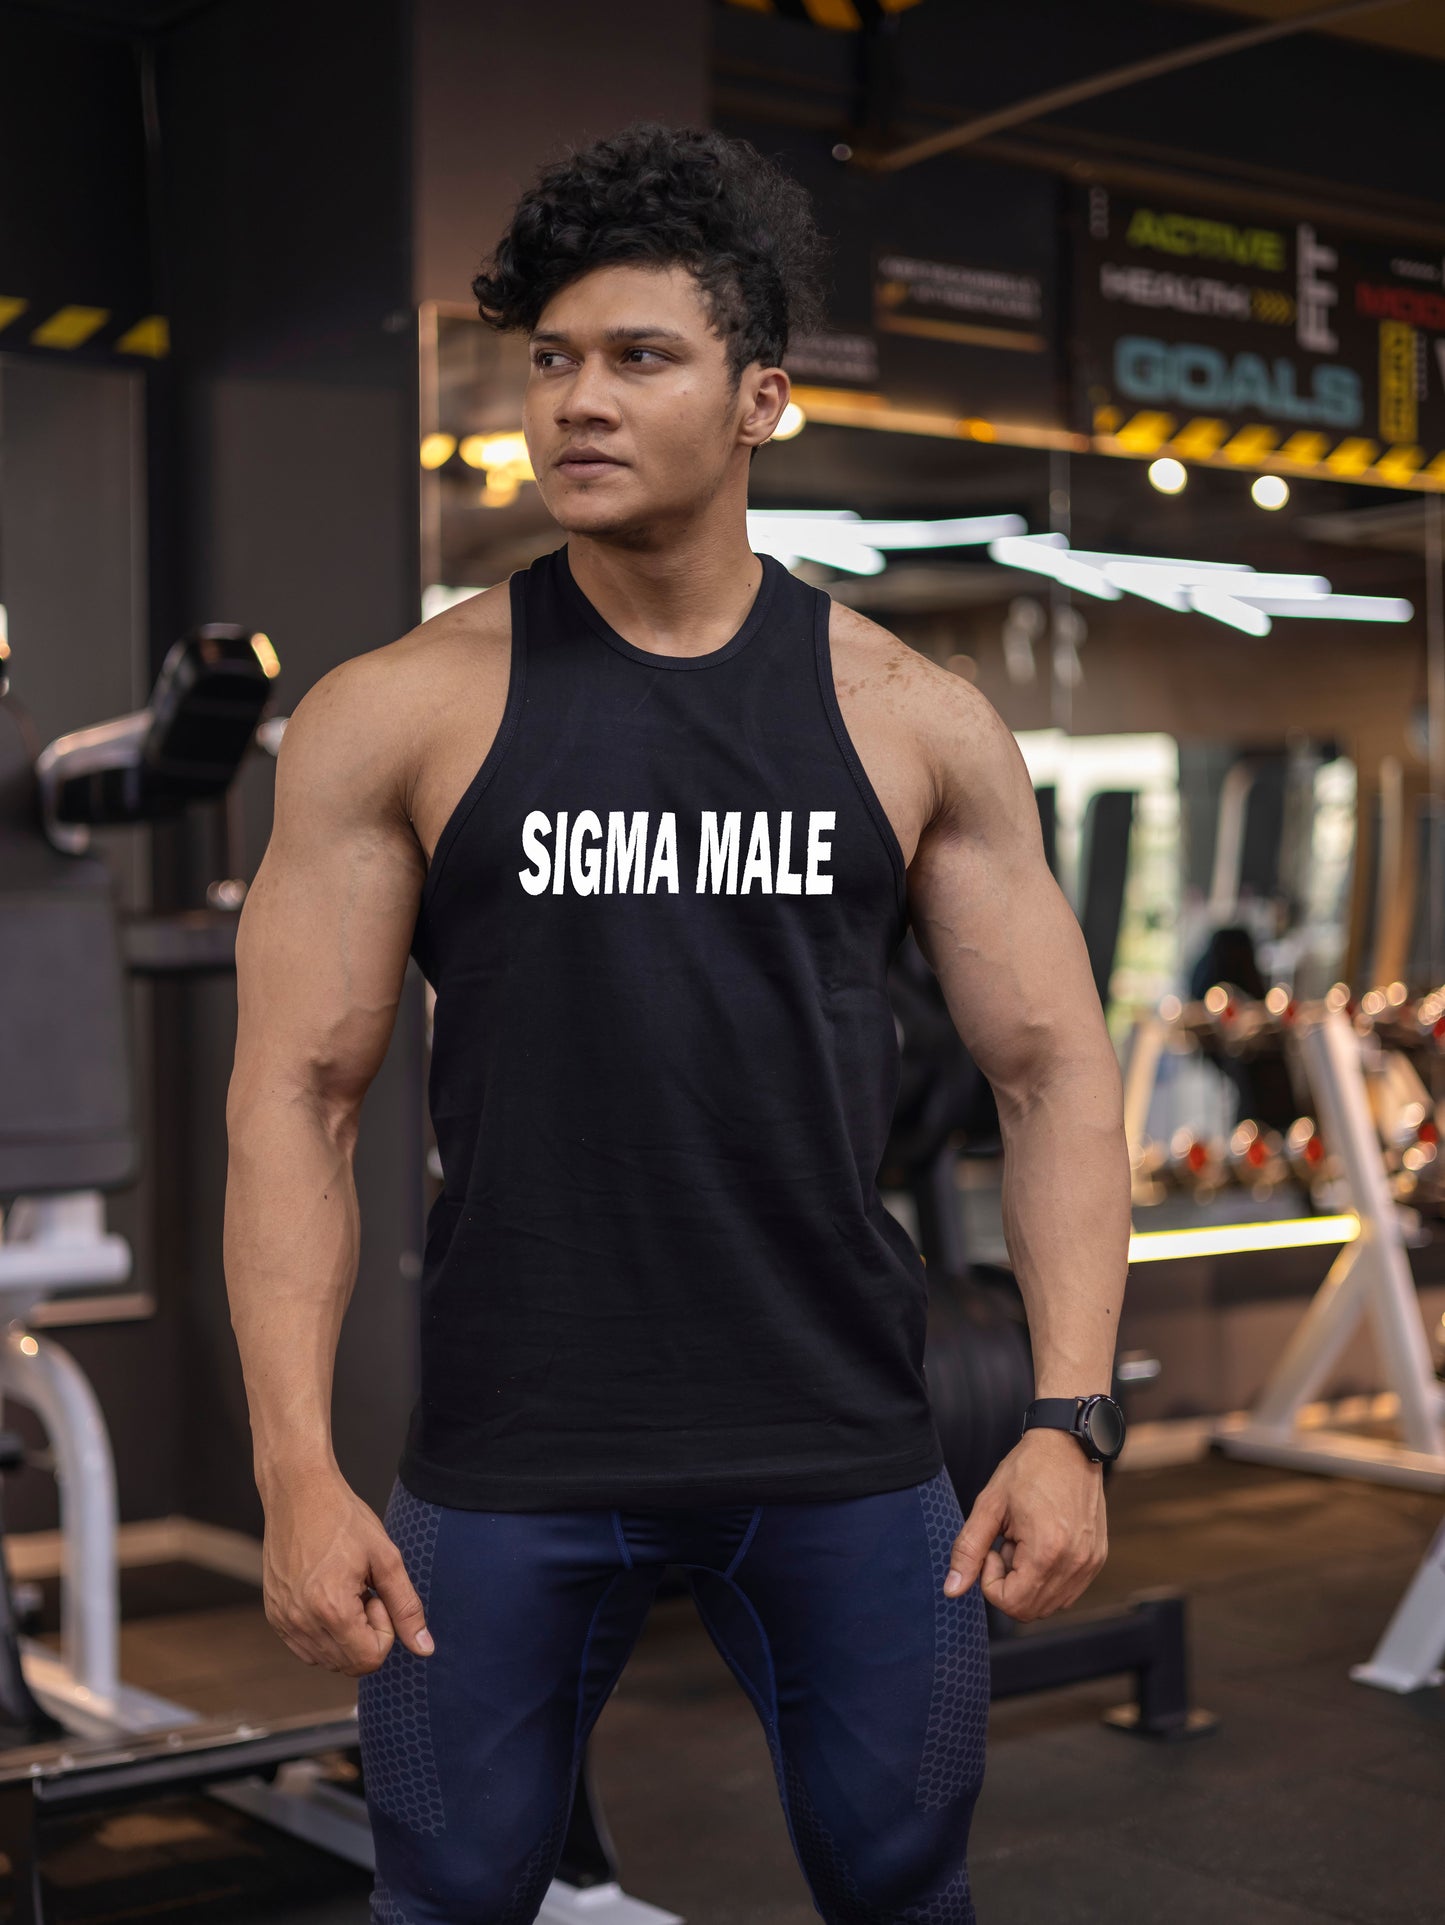 Gym Tank top (Sigma male)